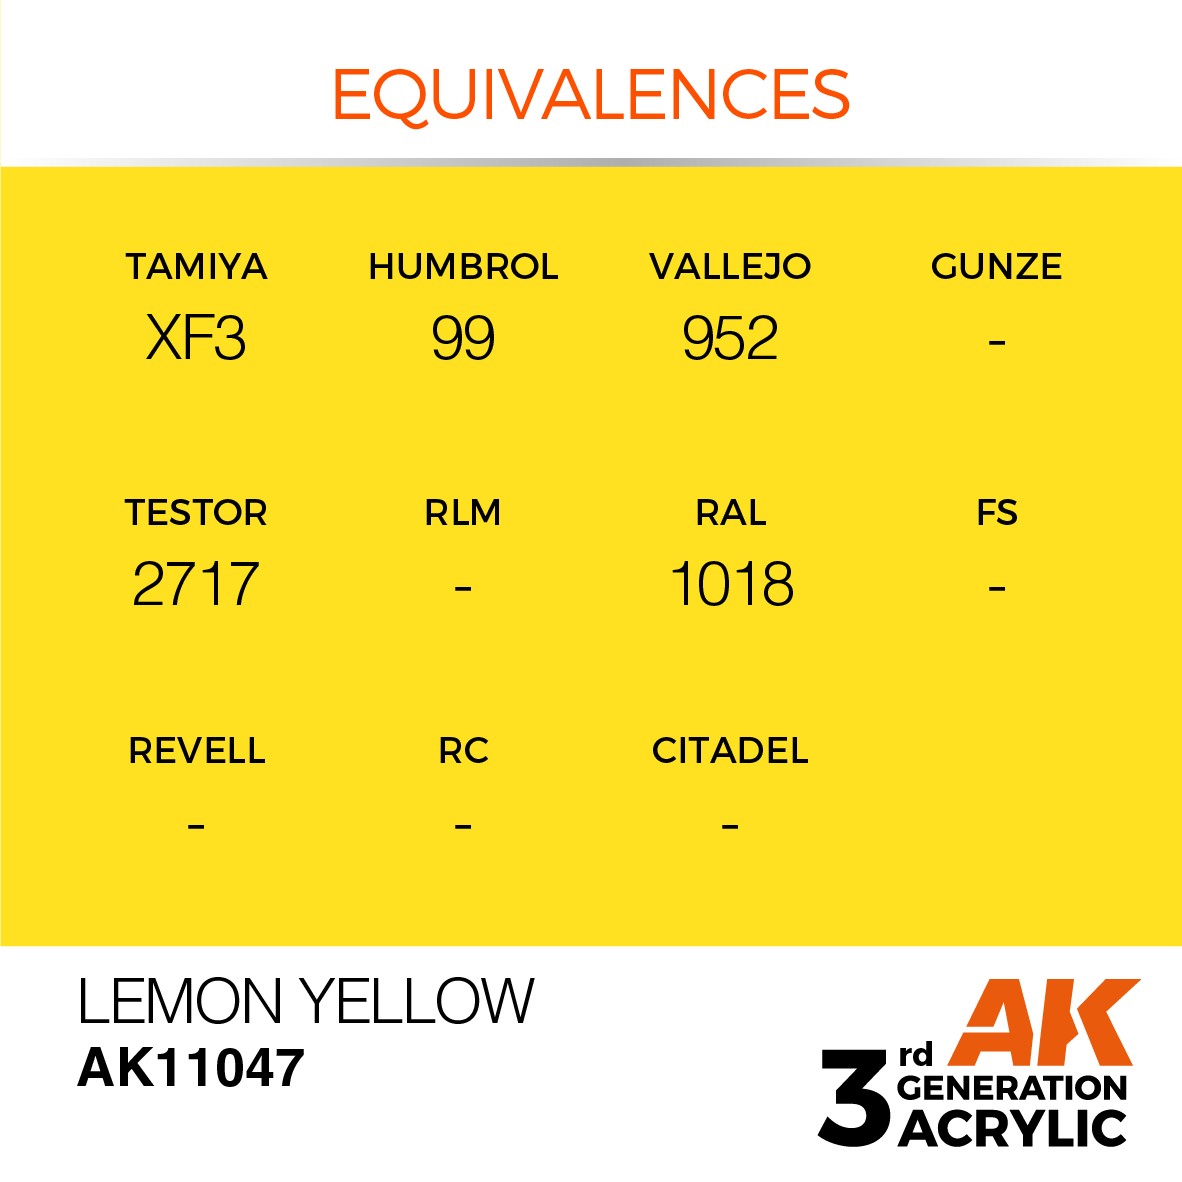 Lemon Yellow - Standard